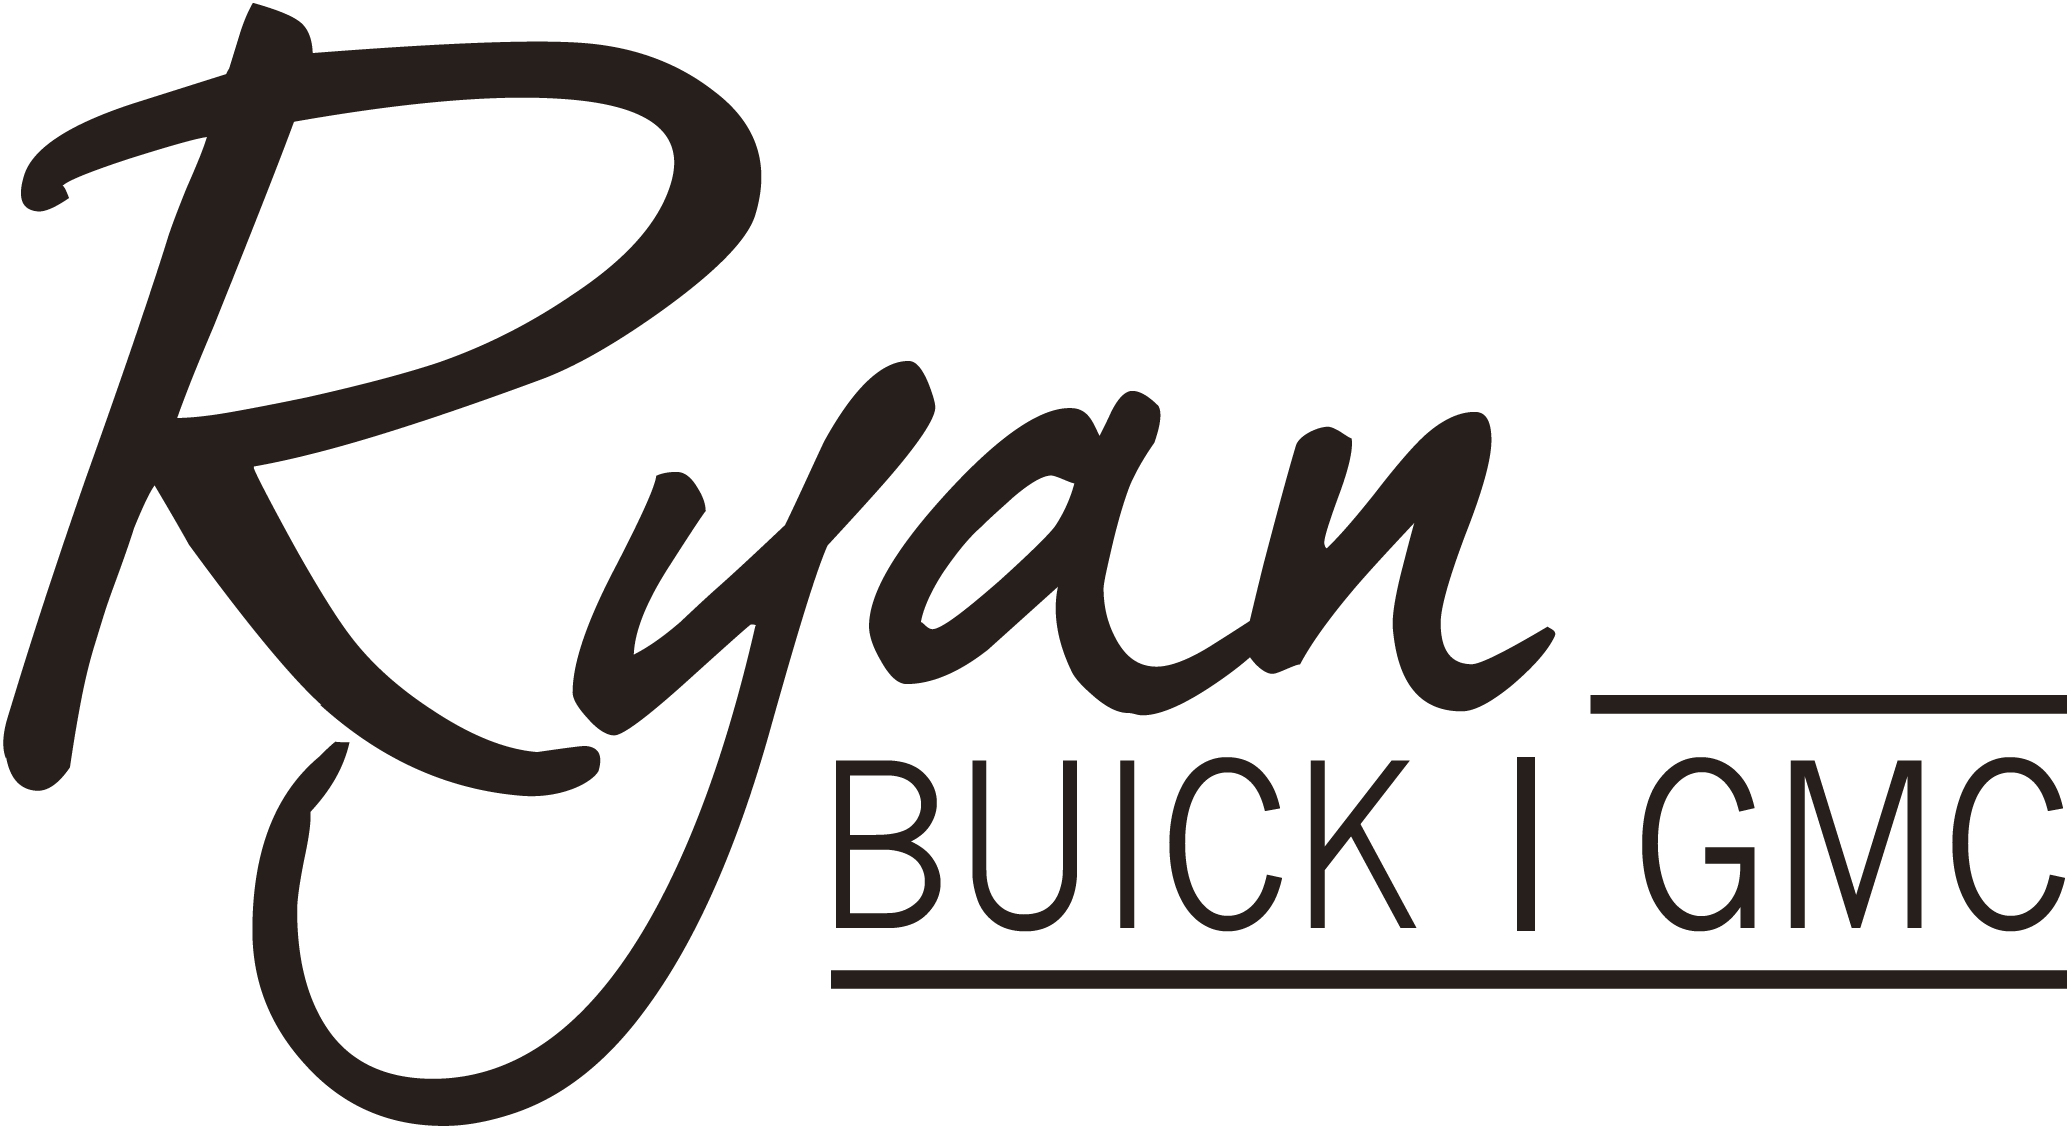 Ryan Buick GMC